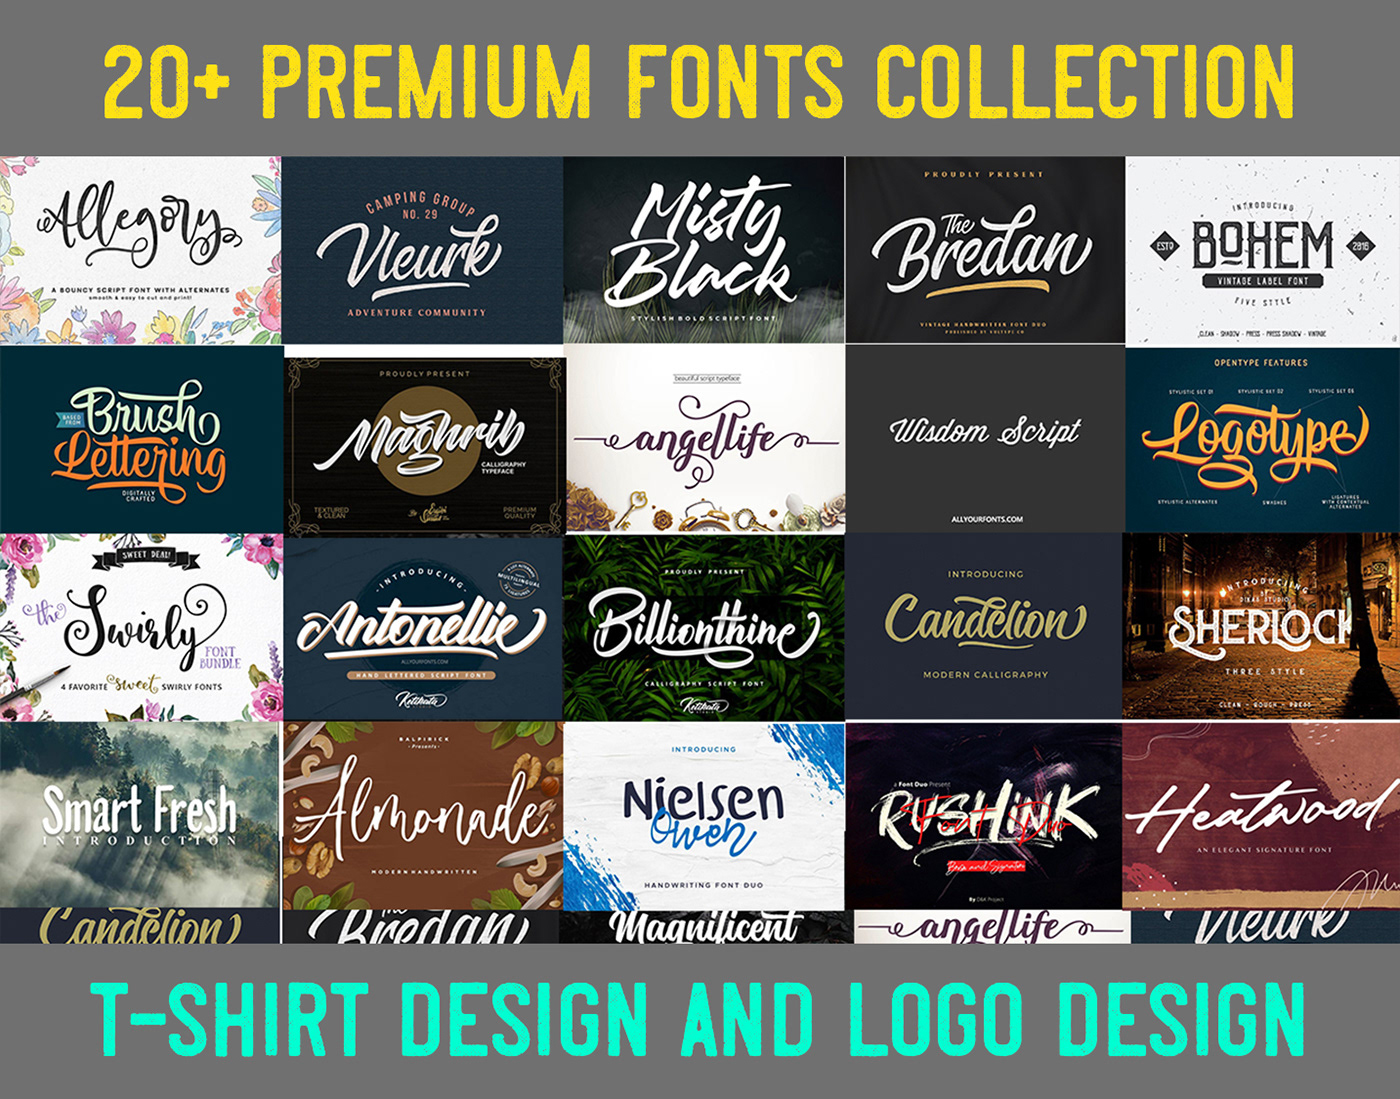 Premium font bundle collection full free download.